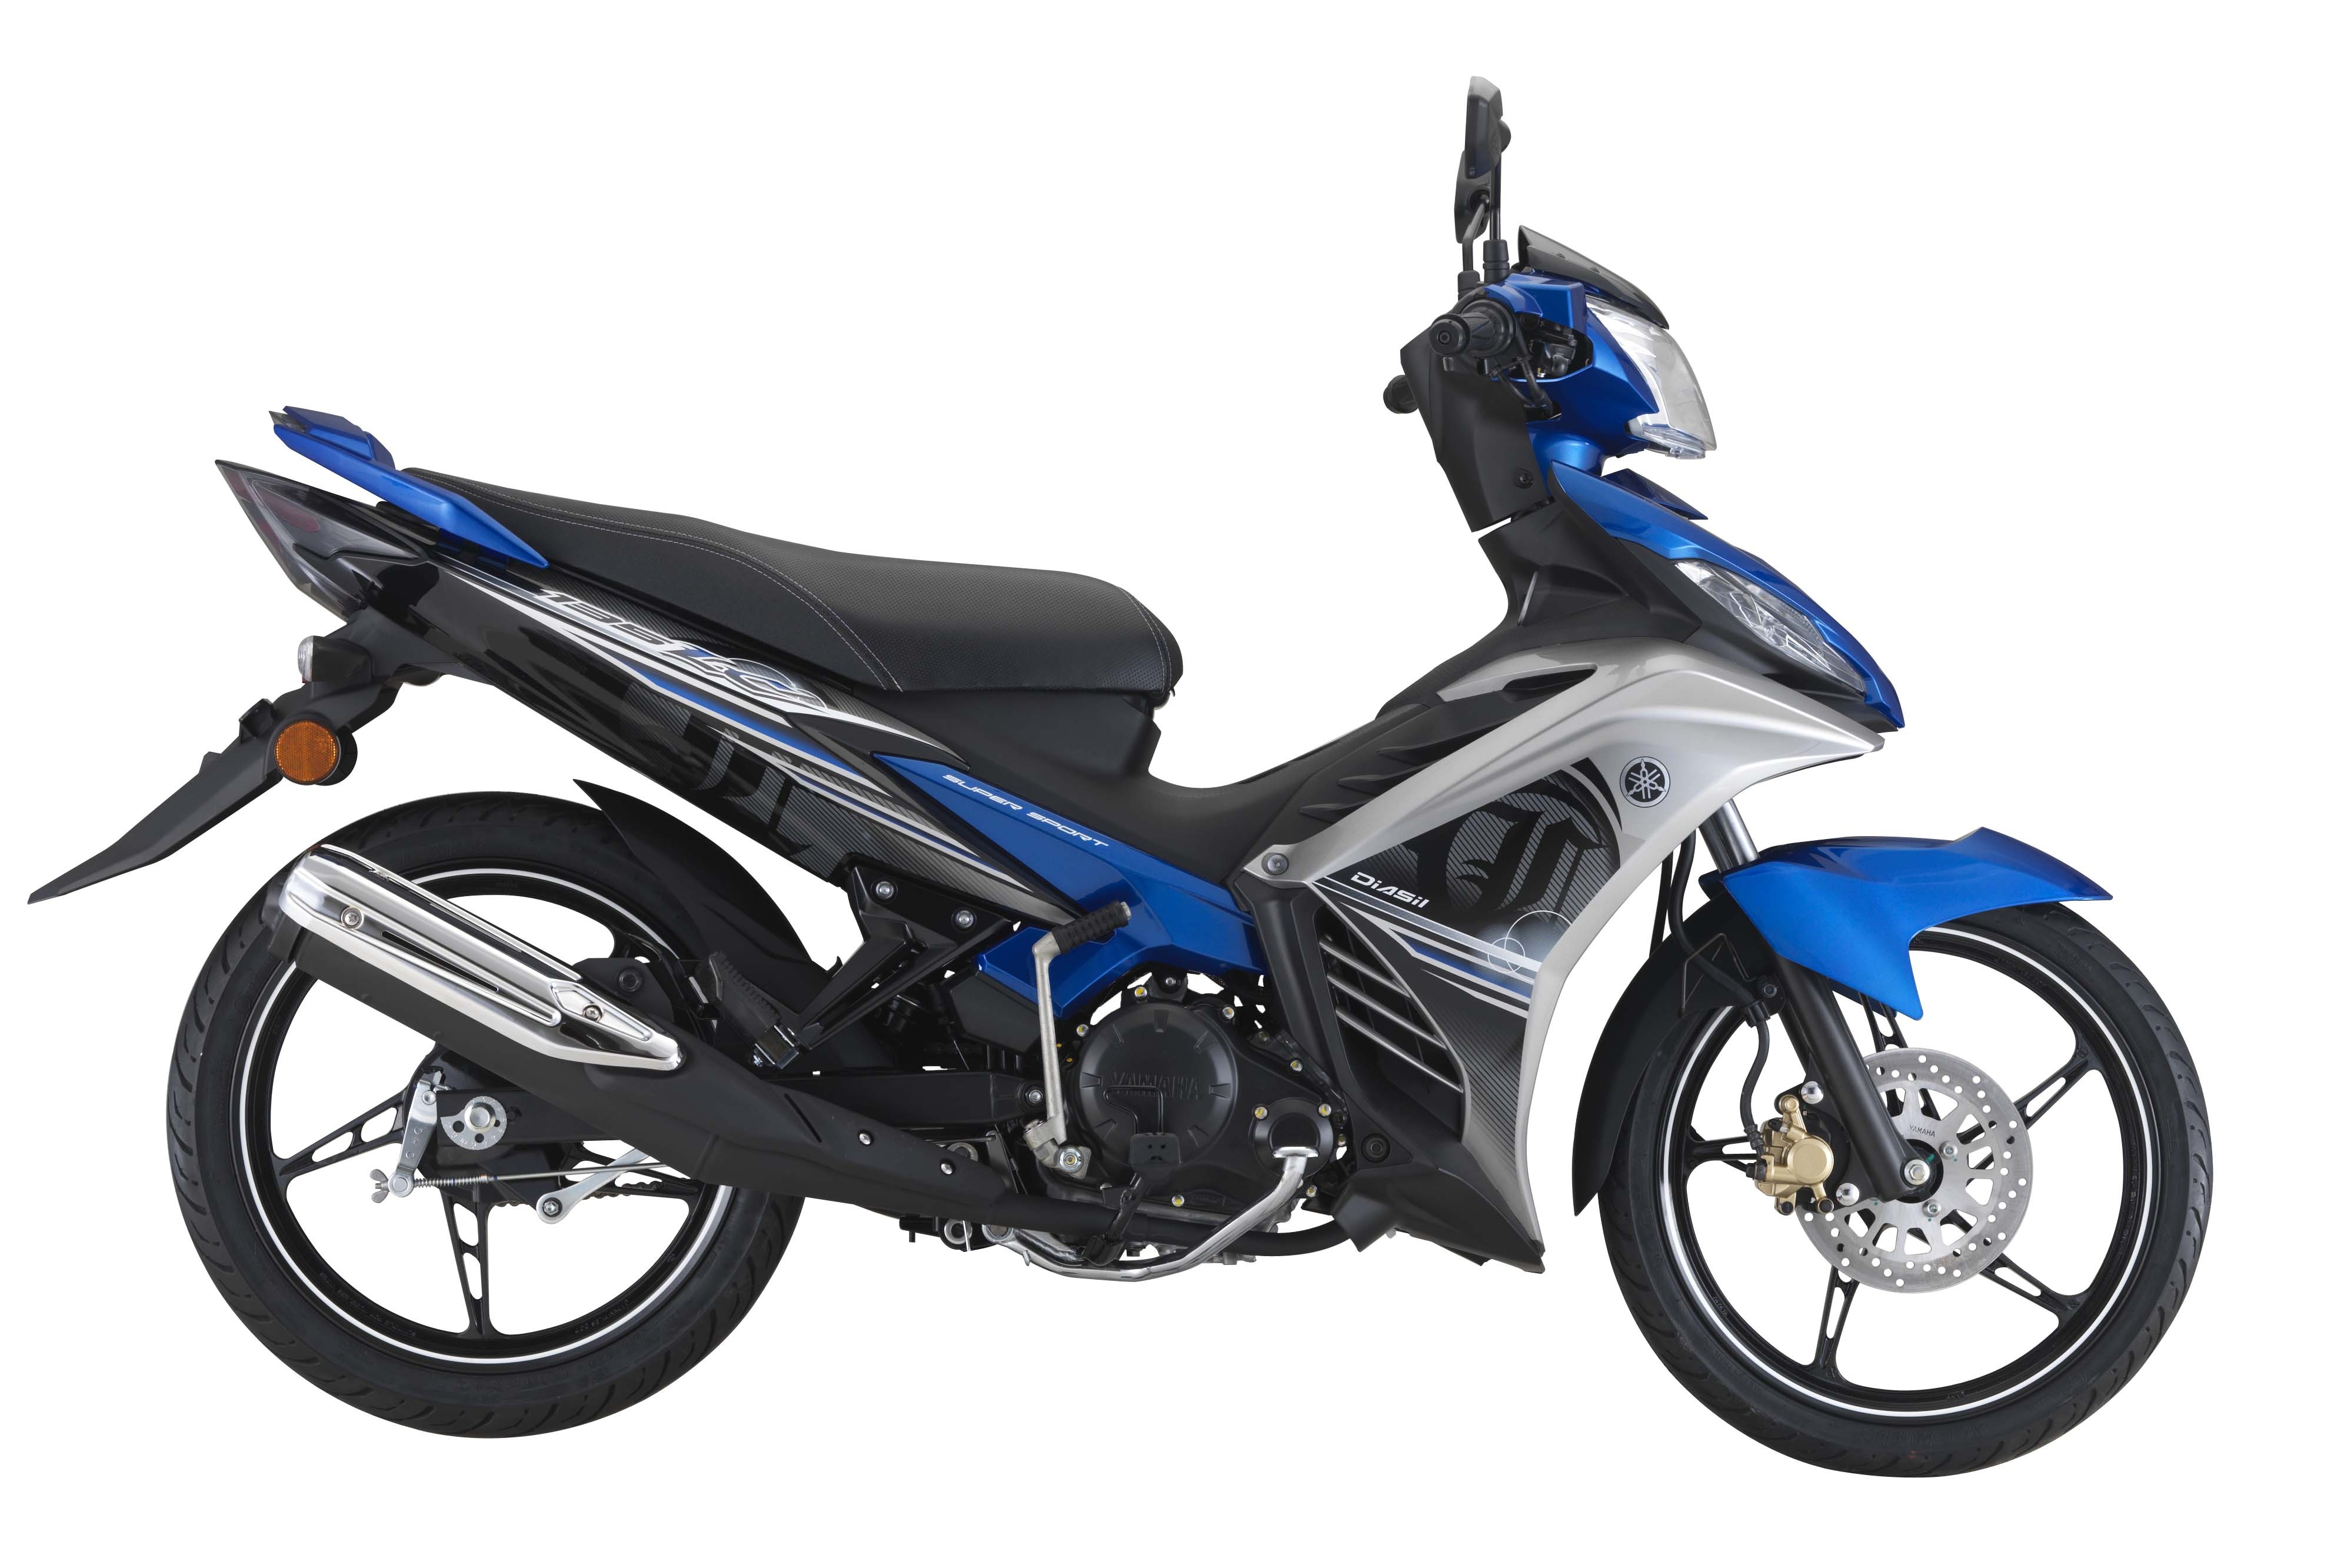 2016 Yamaha 135LC price confirmed, up to RM7,068 Paul Tan - Image 439165